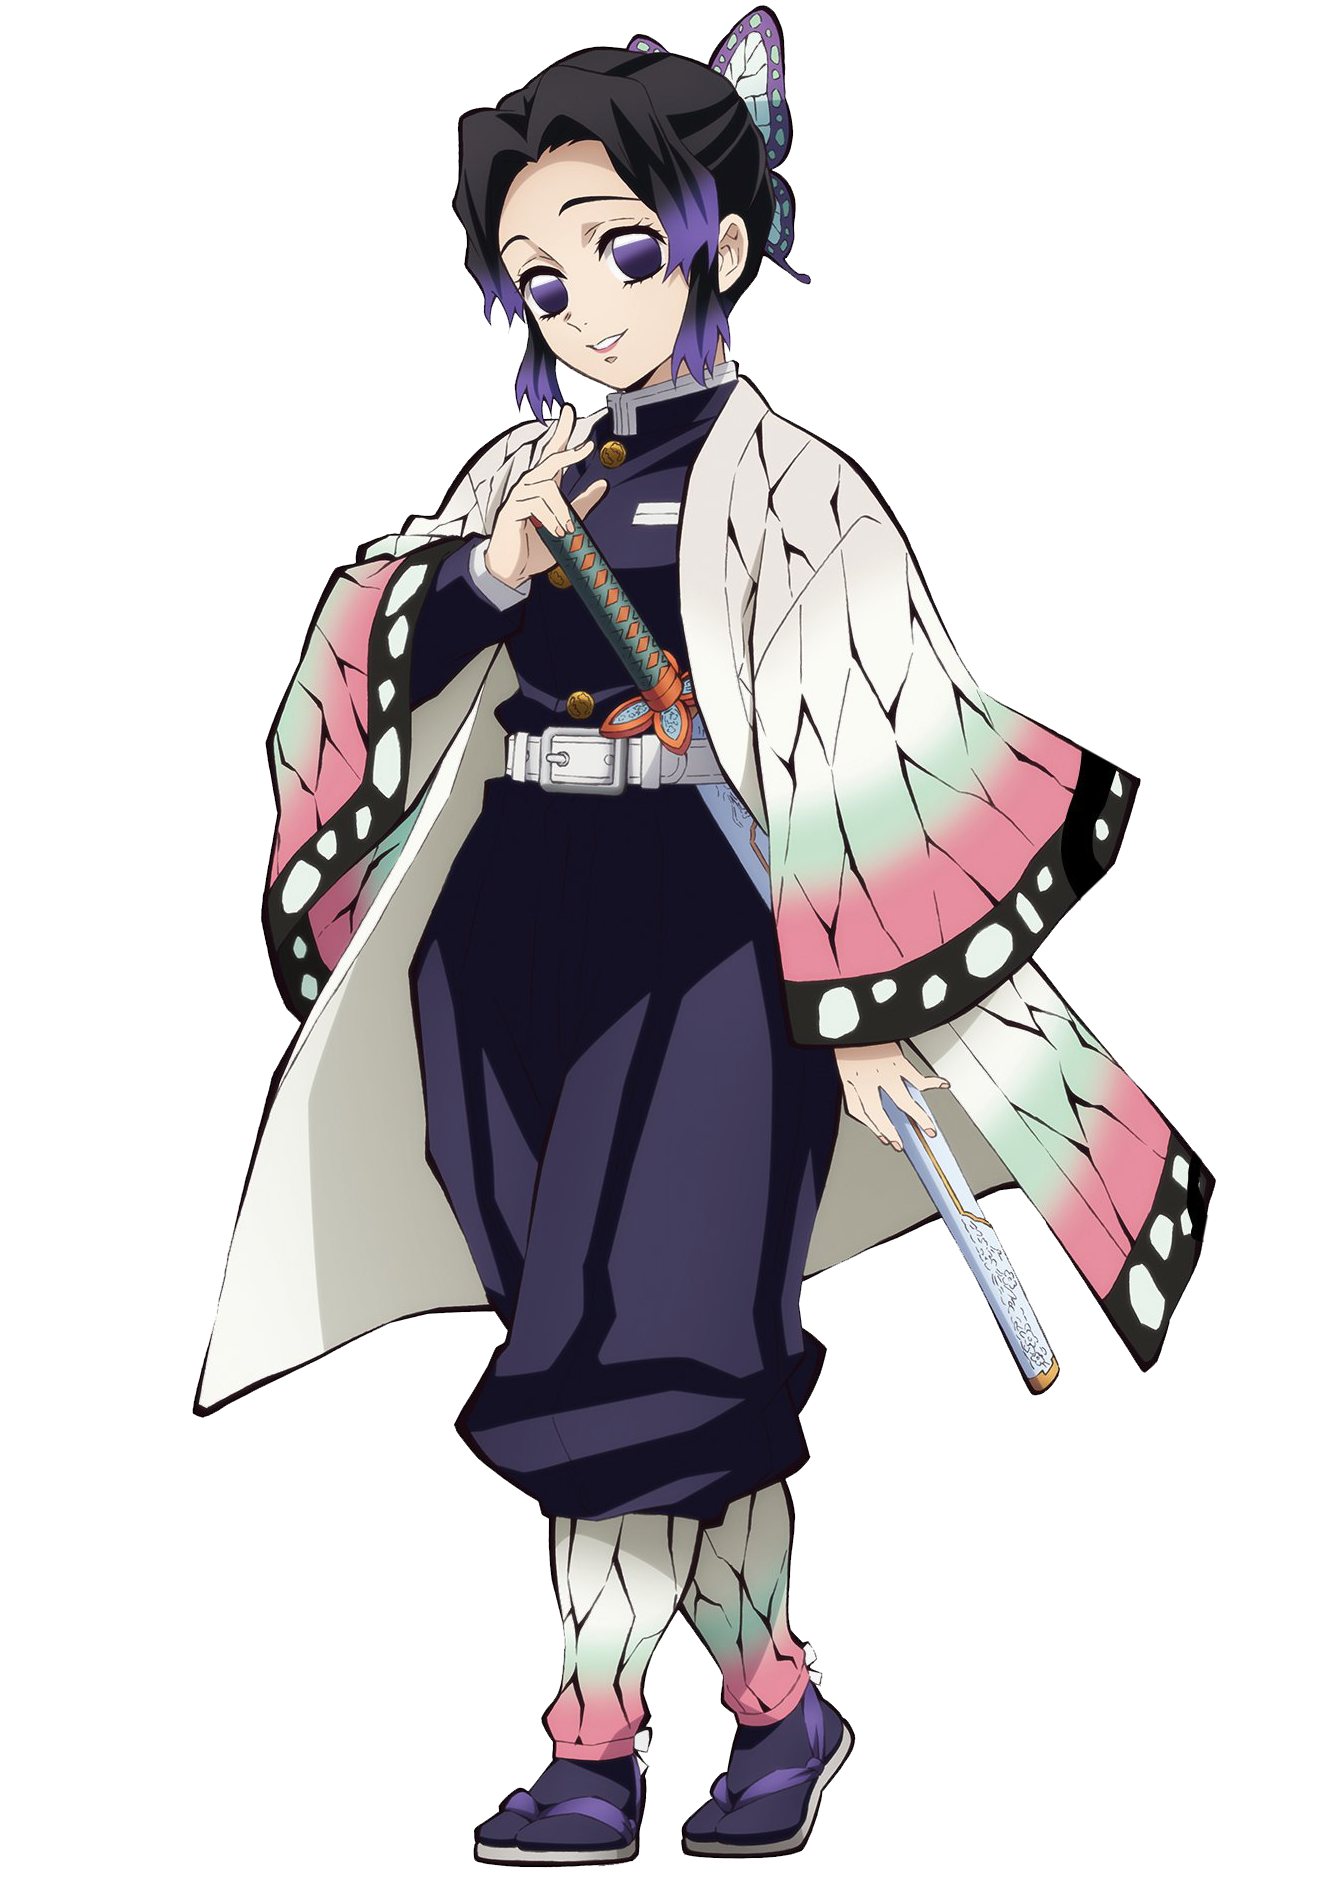 2 characters from anime series demon slayer: shinobu kocho